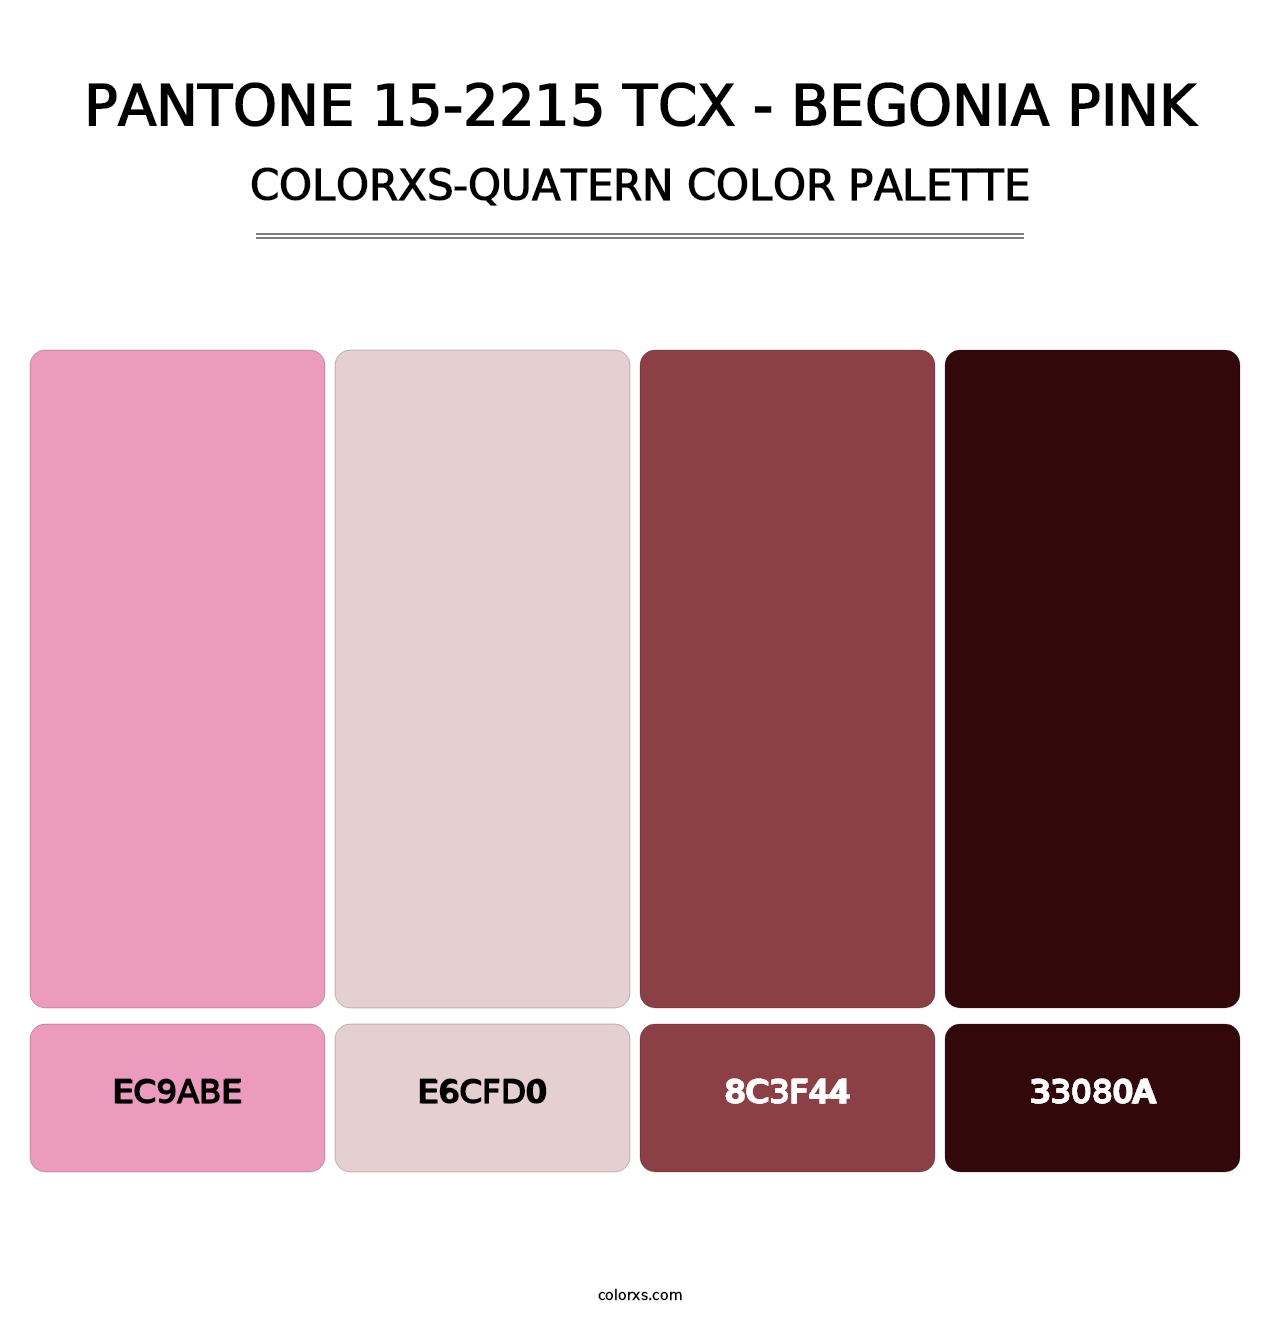 PANTONE 15-2215 TCX - Begonia Pink - Colorxs Quatern Palette